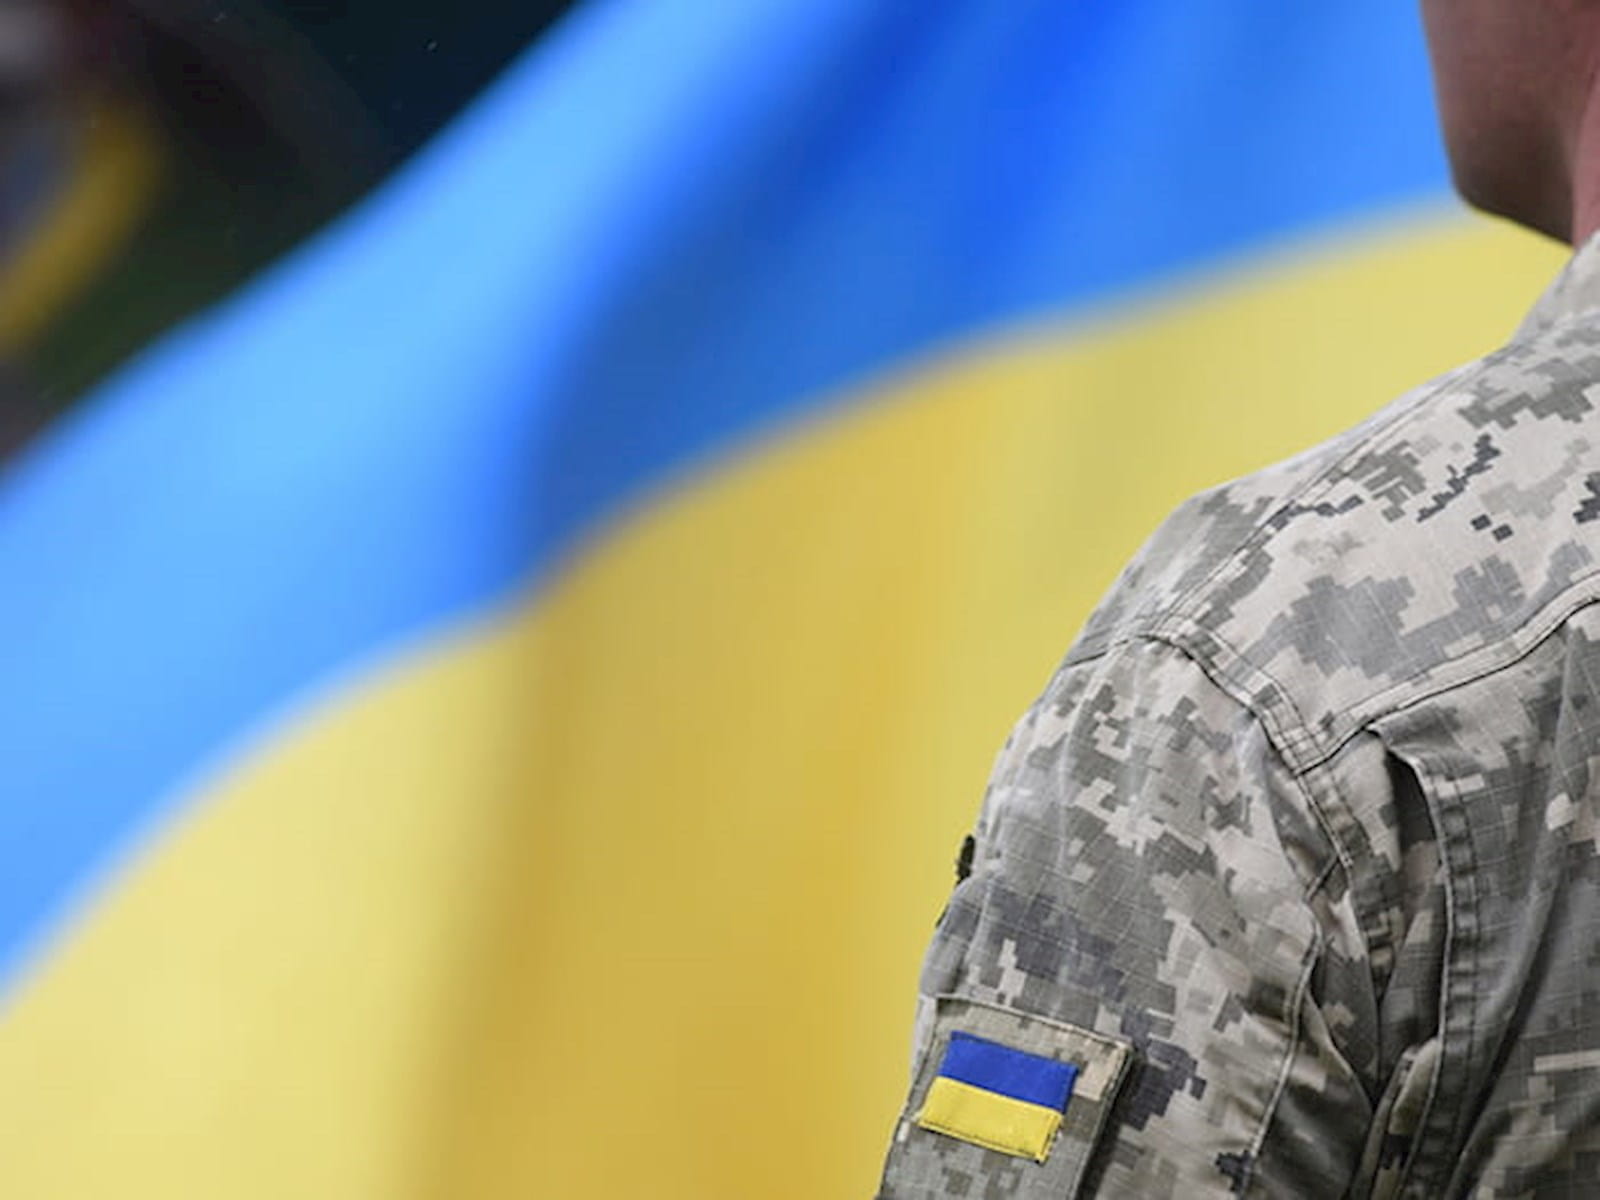 Soldier in front of Ukrainian flag